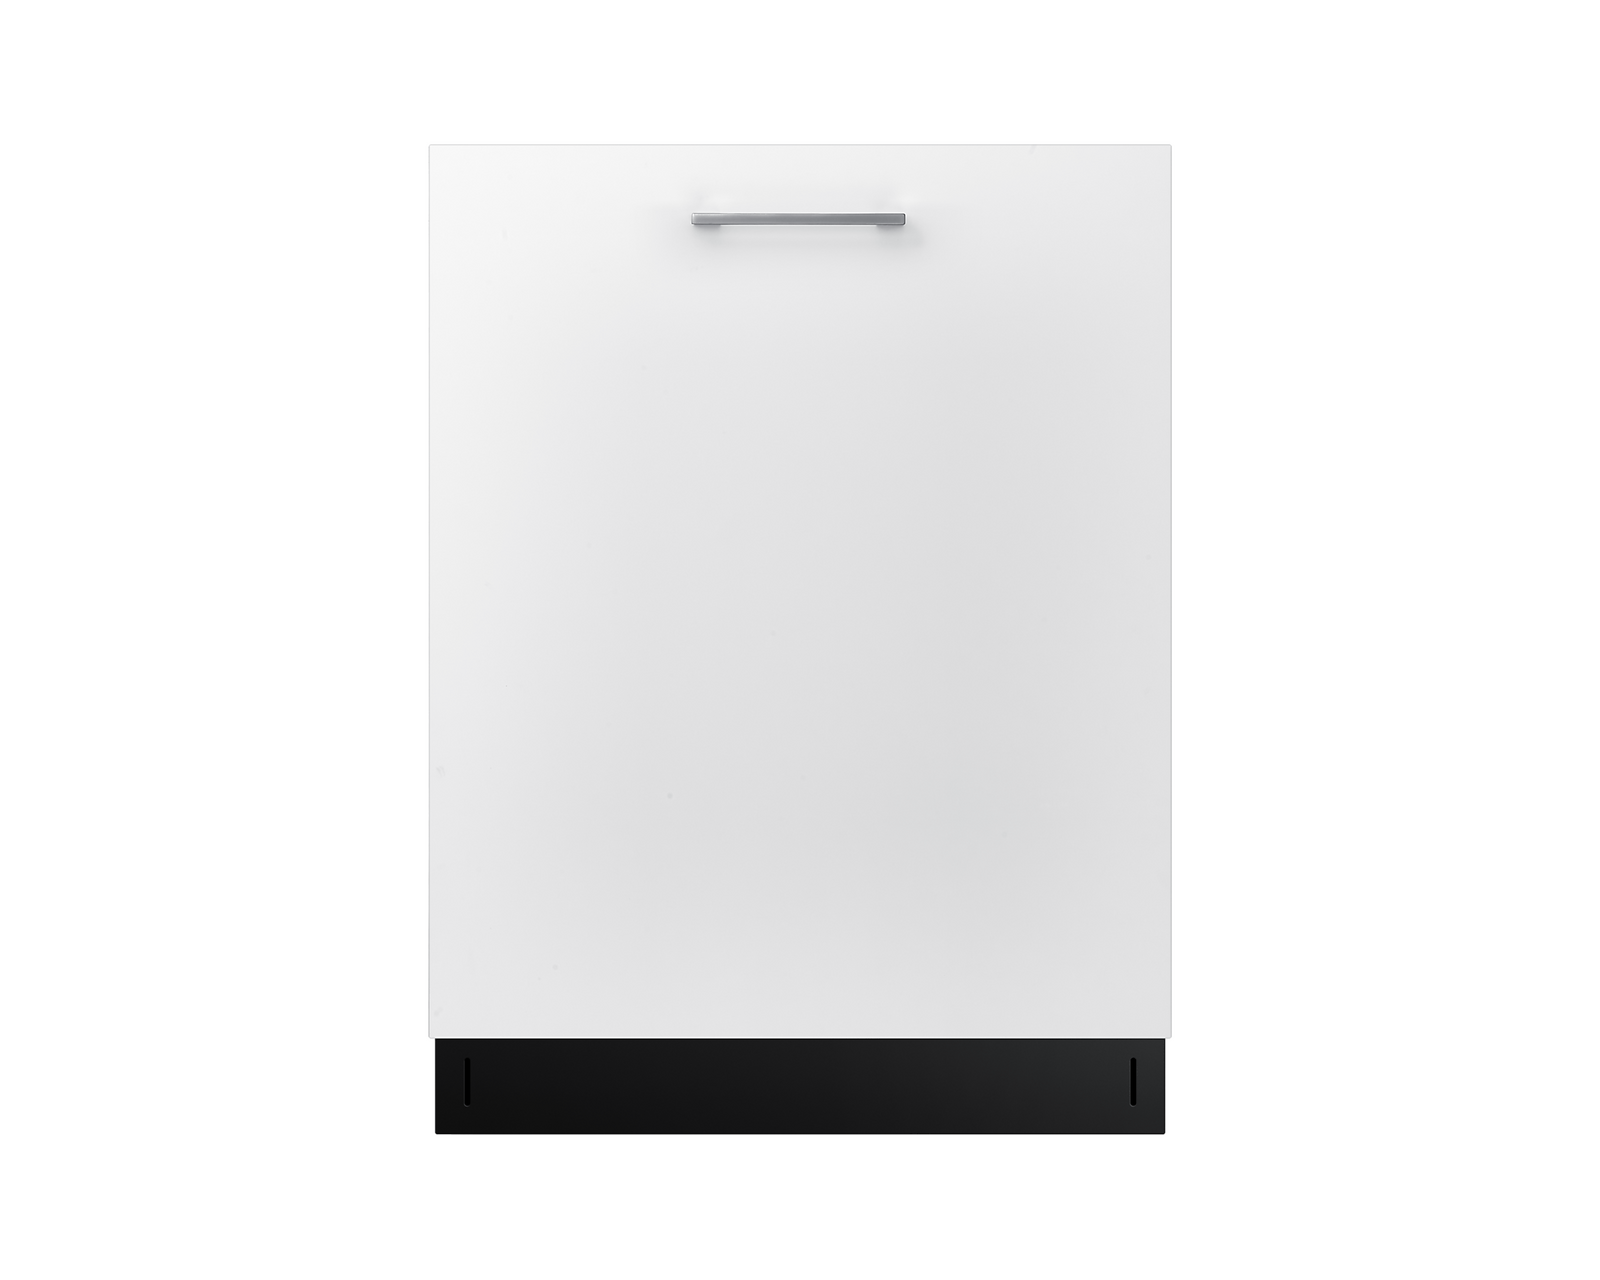 Посудомоечная машина Samsung DW60R7070BB/WT белая